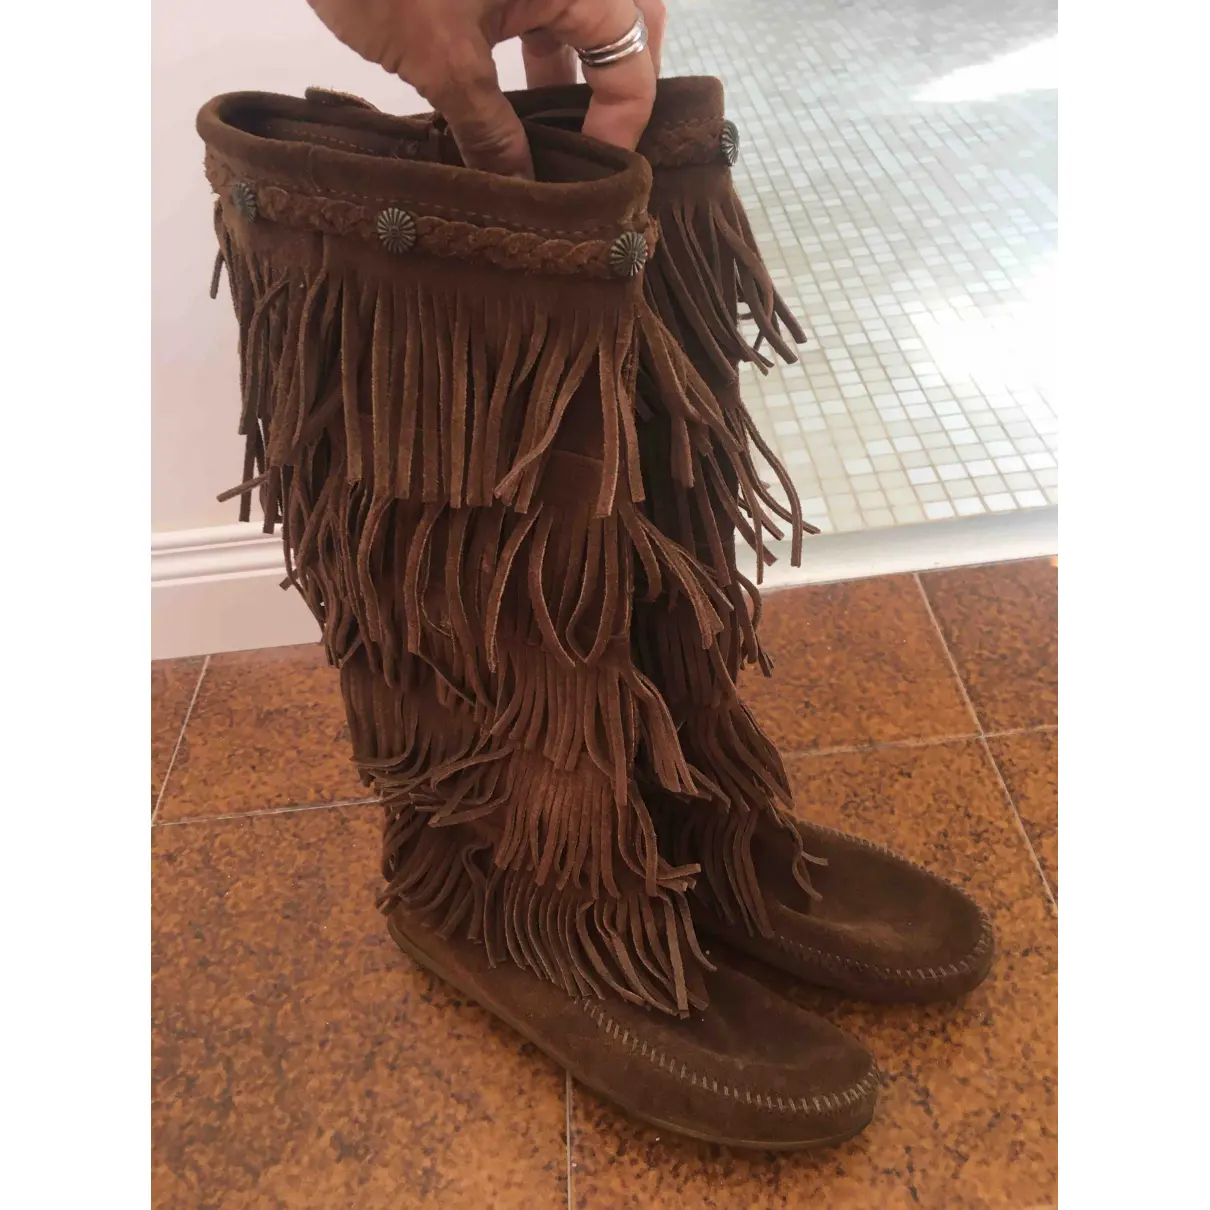 Buy Minnetonka Cowboy boots online